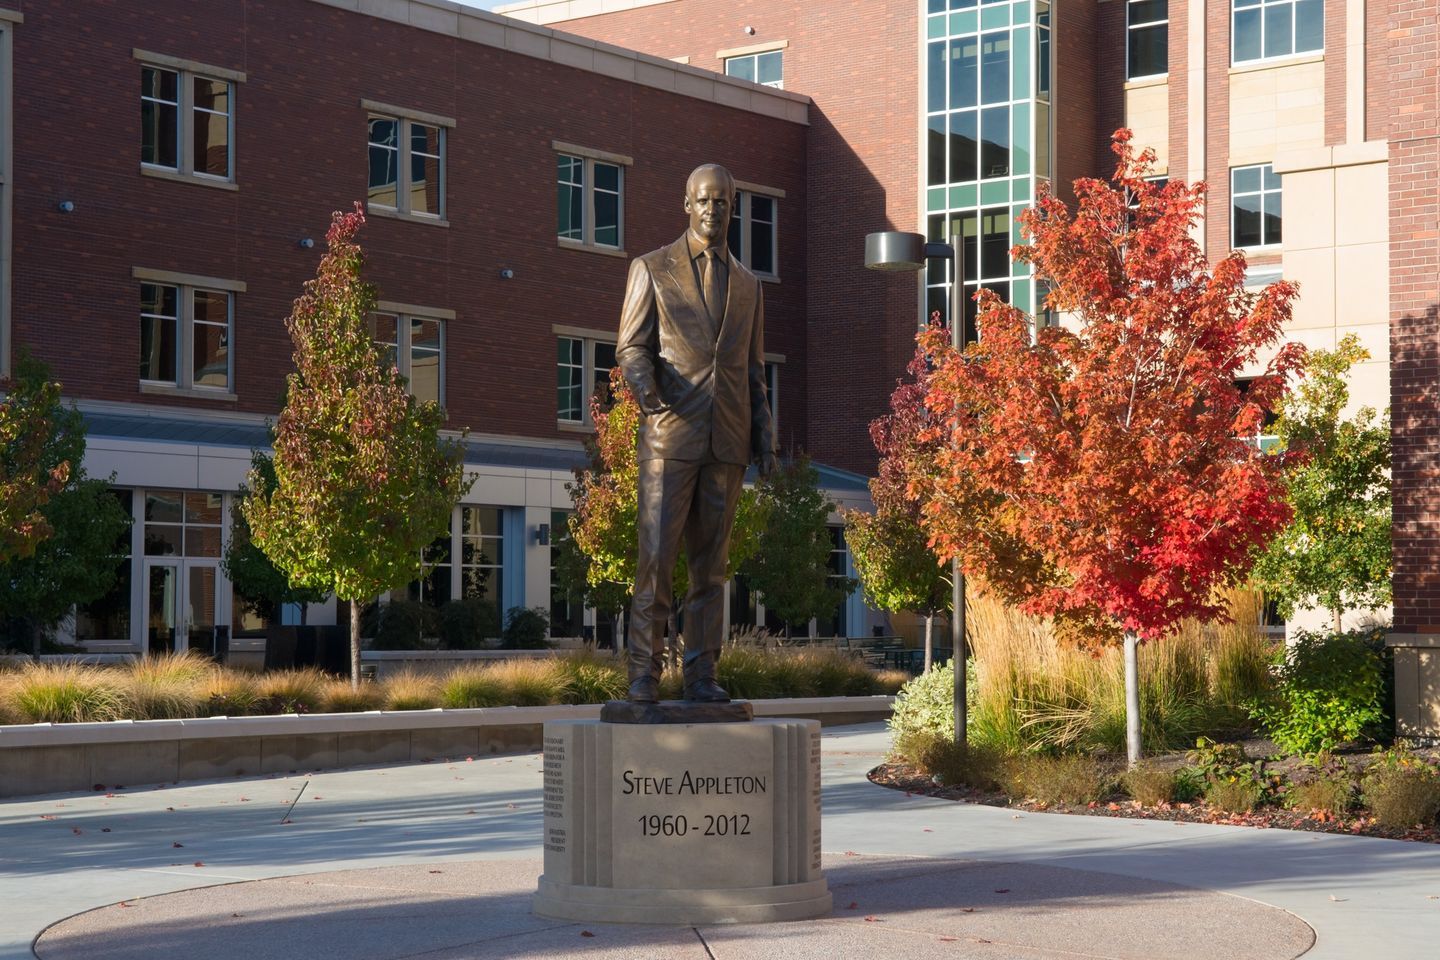 Steve Appleton statue in front of COBE